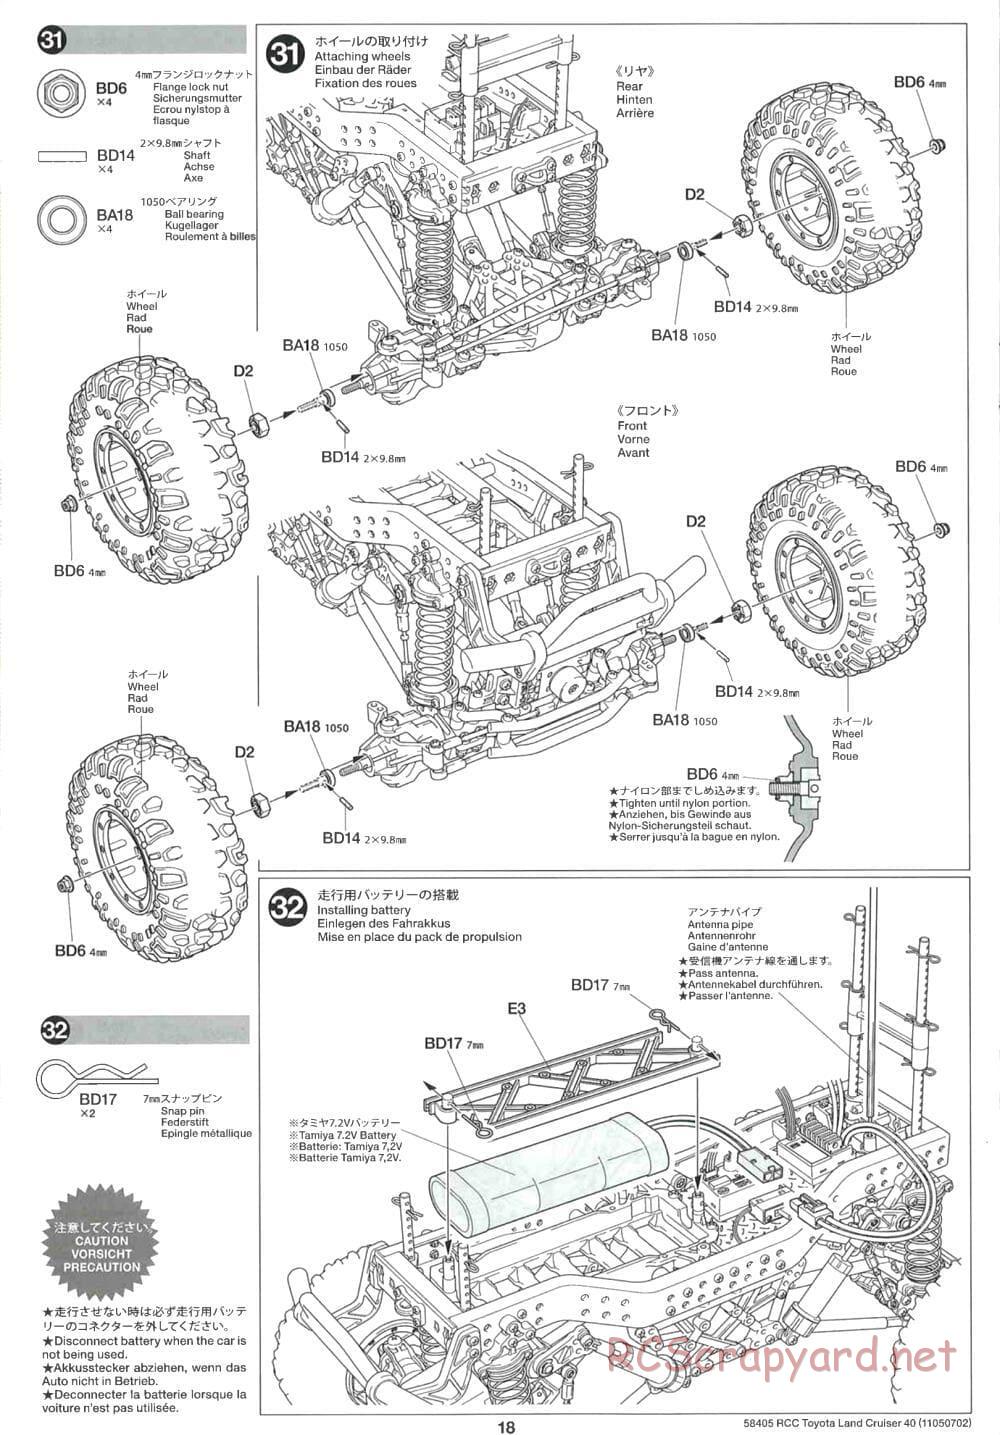 Tamiya - Toyota Land Cruiser 40 - CR-01 Chassis - Manual - Page 18